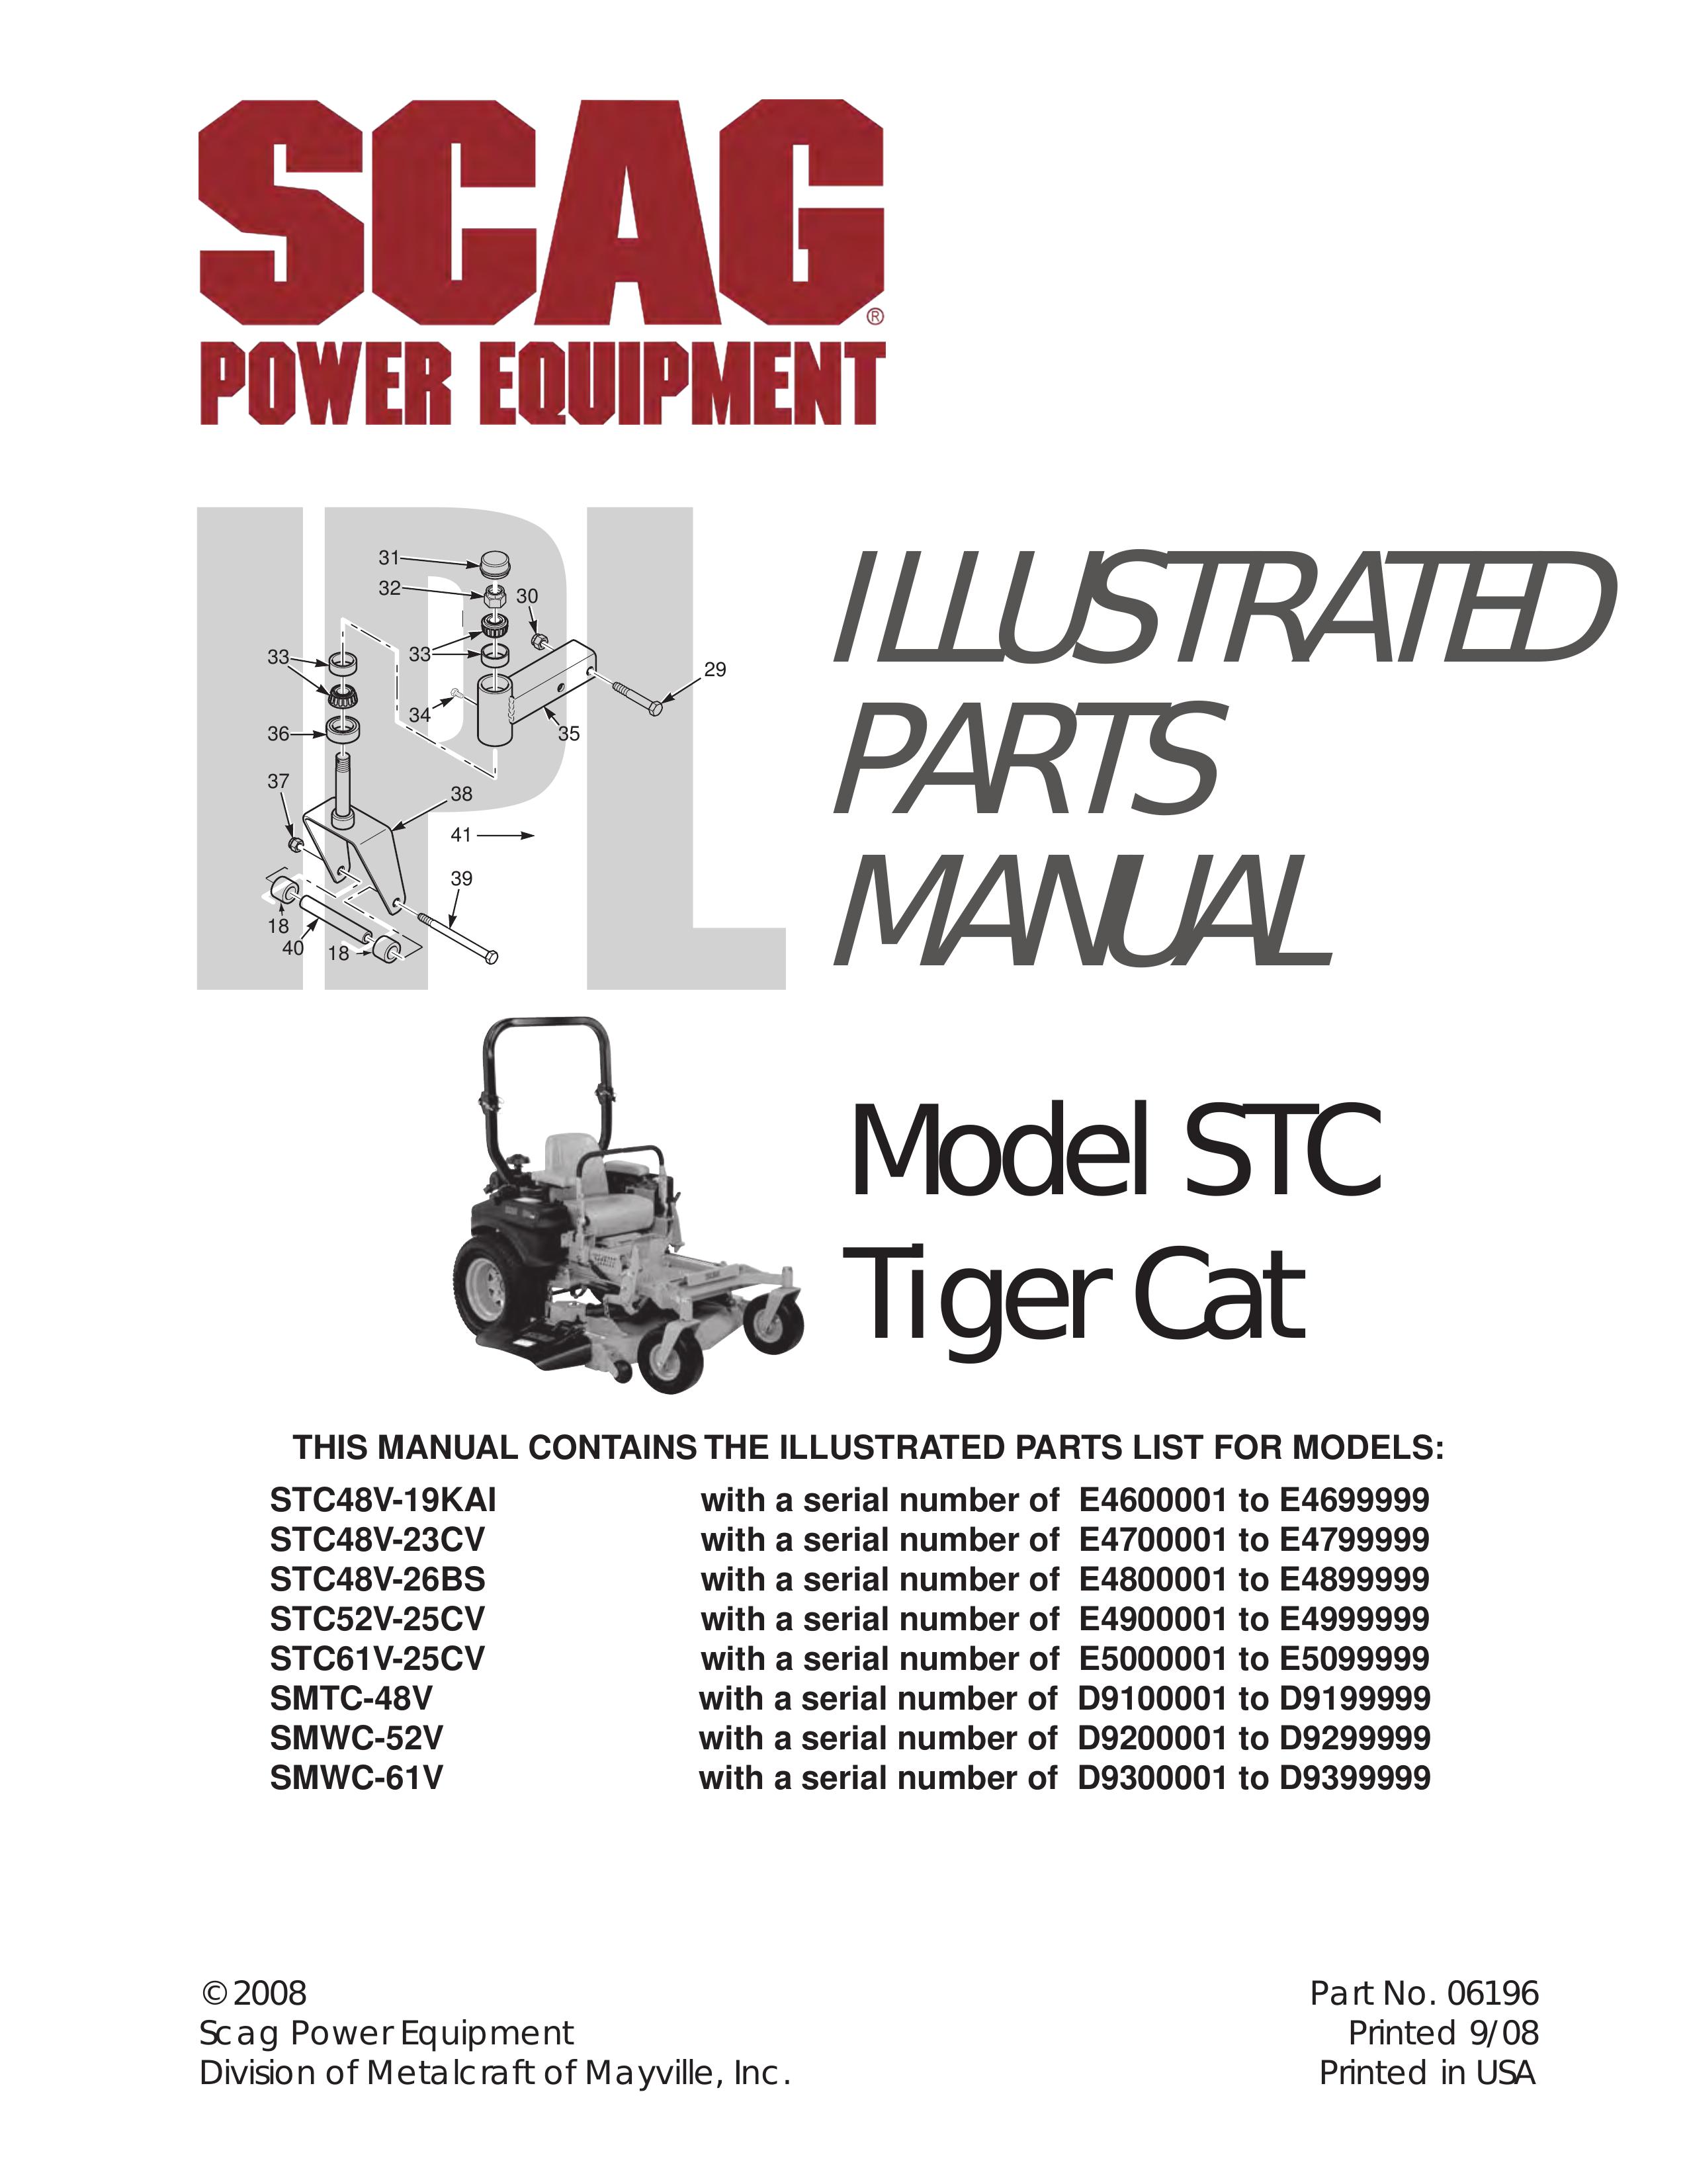 Scag Power Equipment SMWC-61V Lawn Mower User Manual